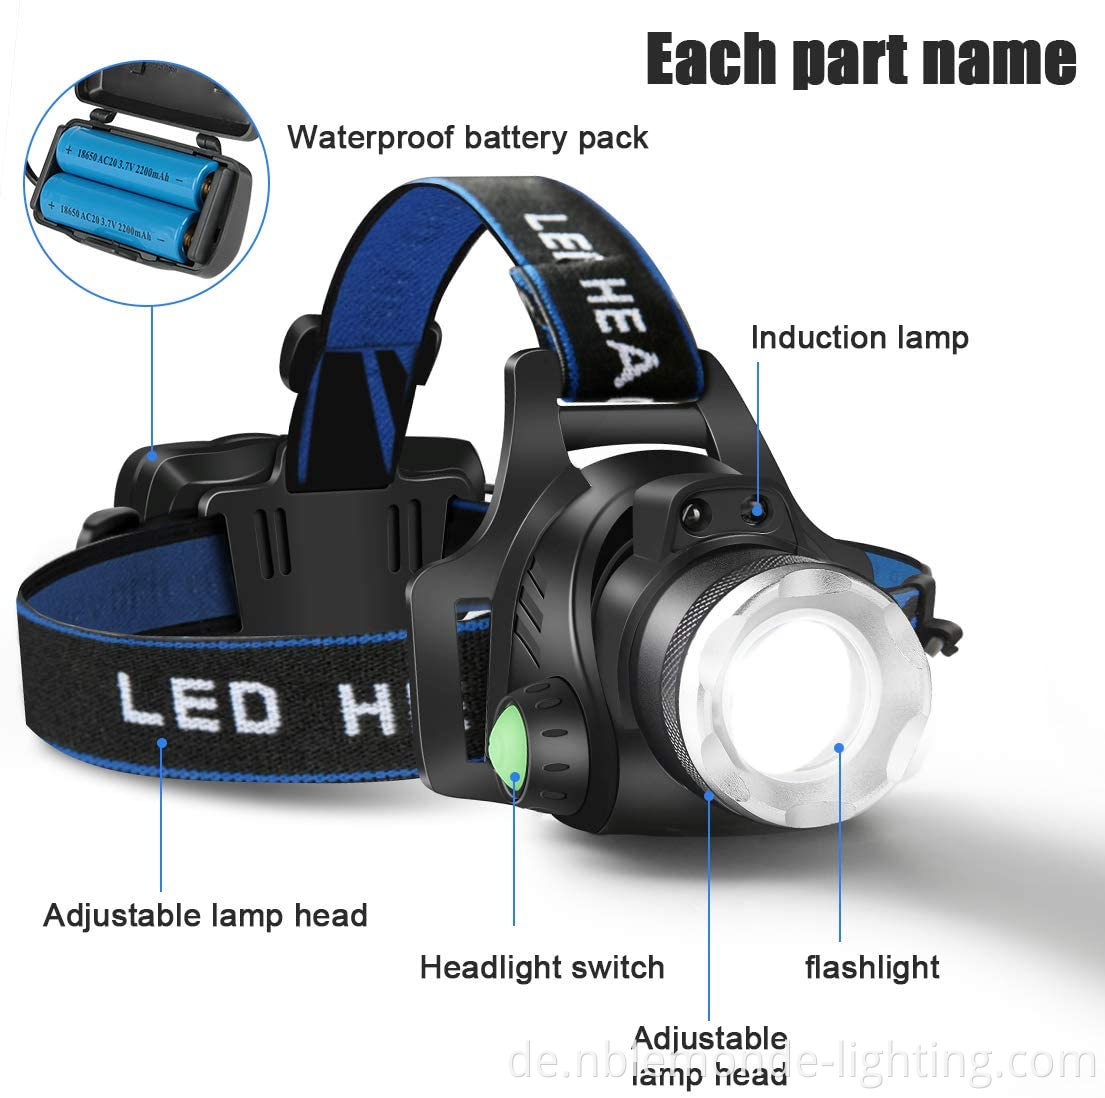  High-intensity USB Sensor Headlamp